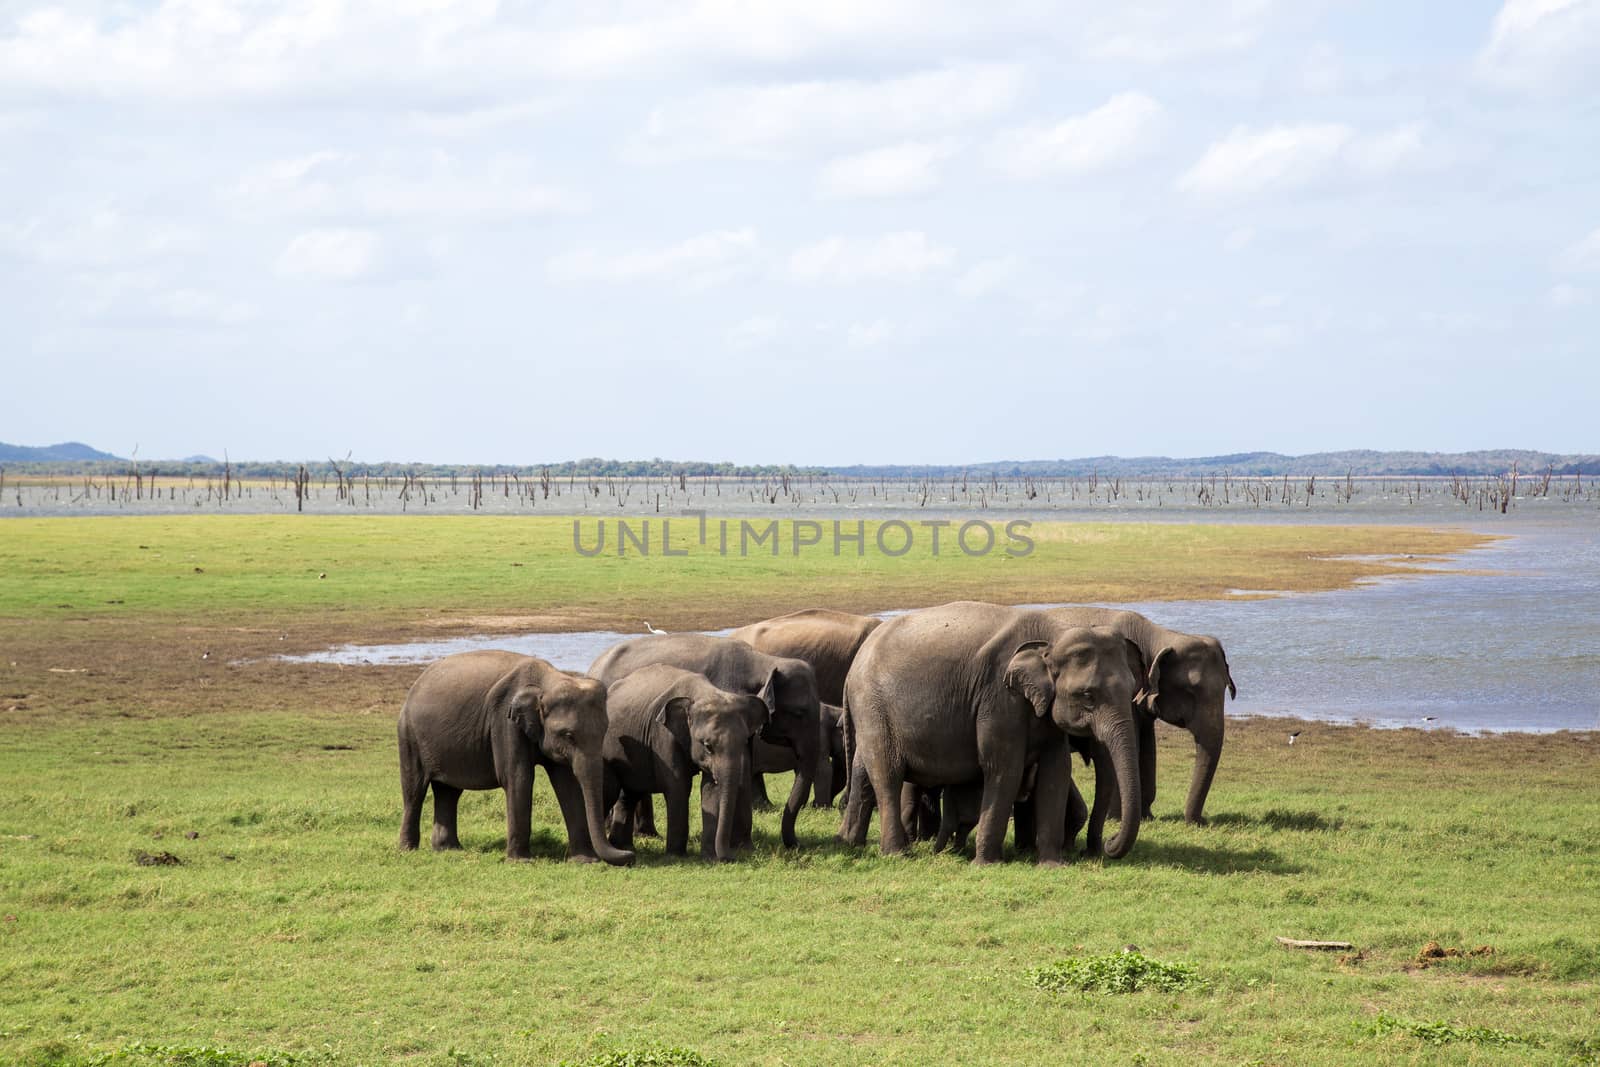 Kaudulla National Park, Sri Lanka - August 16, 2018: A herd of elephants at a lake in Kaudulla National Park